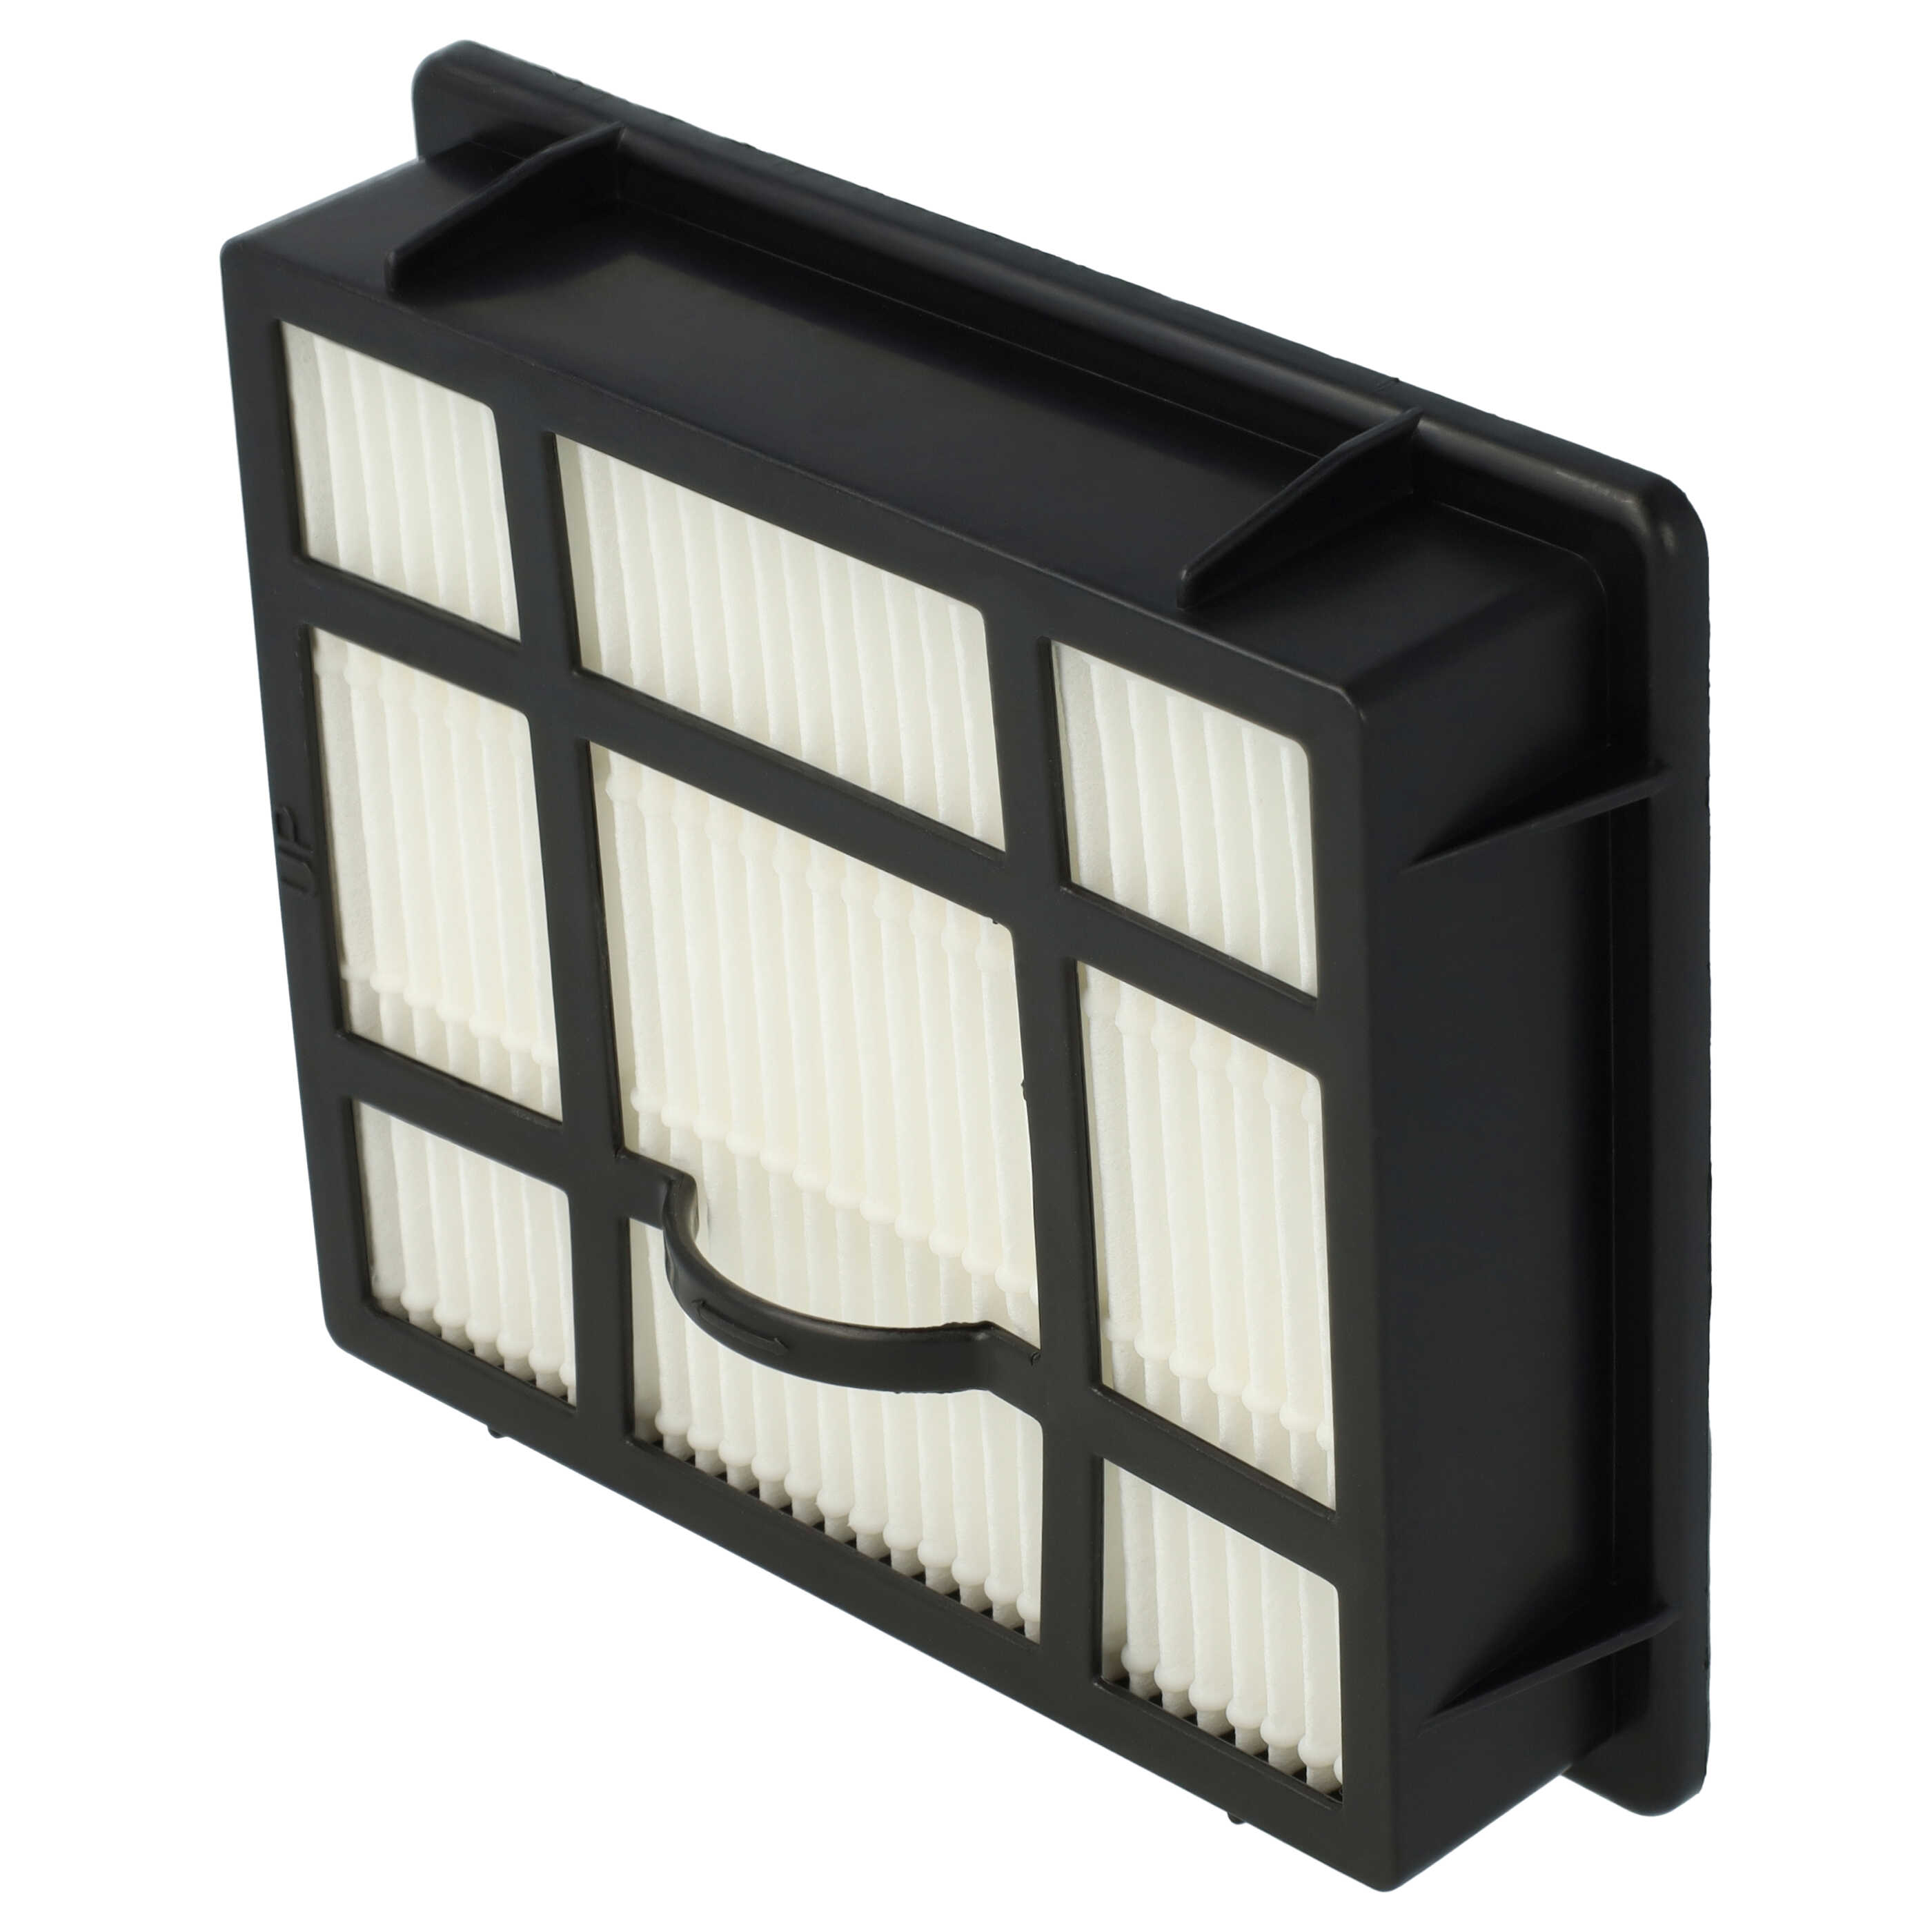 Filtro reemplaza AEG/Electrolux 4055116125, 1924992207 para aspiradora - filtro Hepa negro / blanco